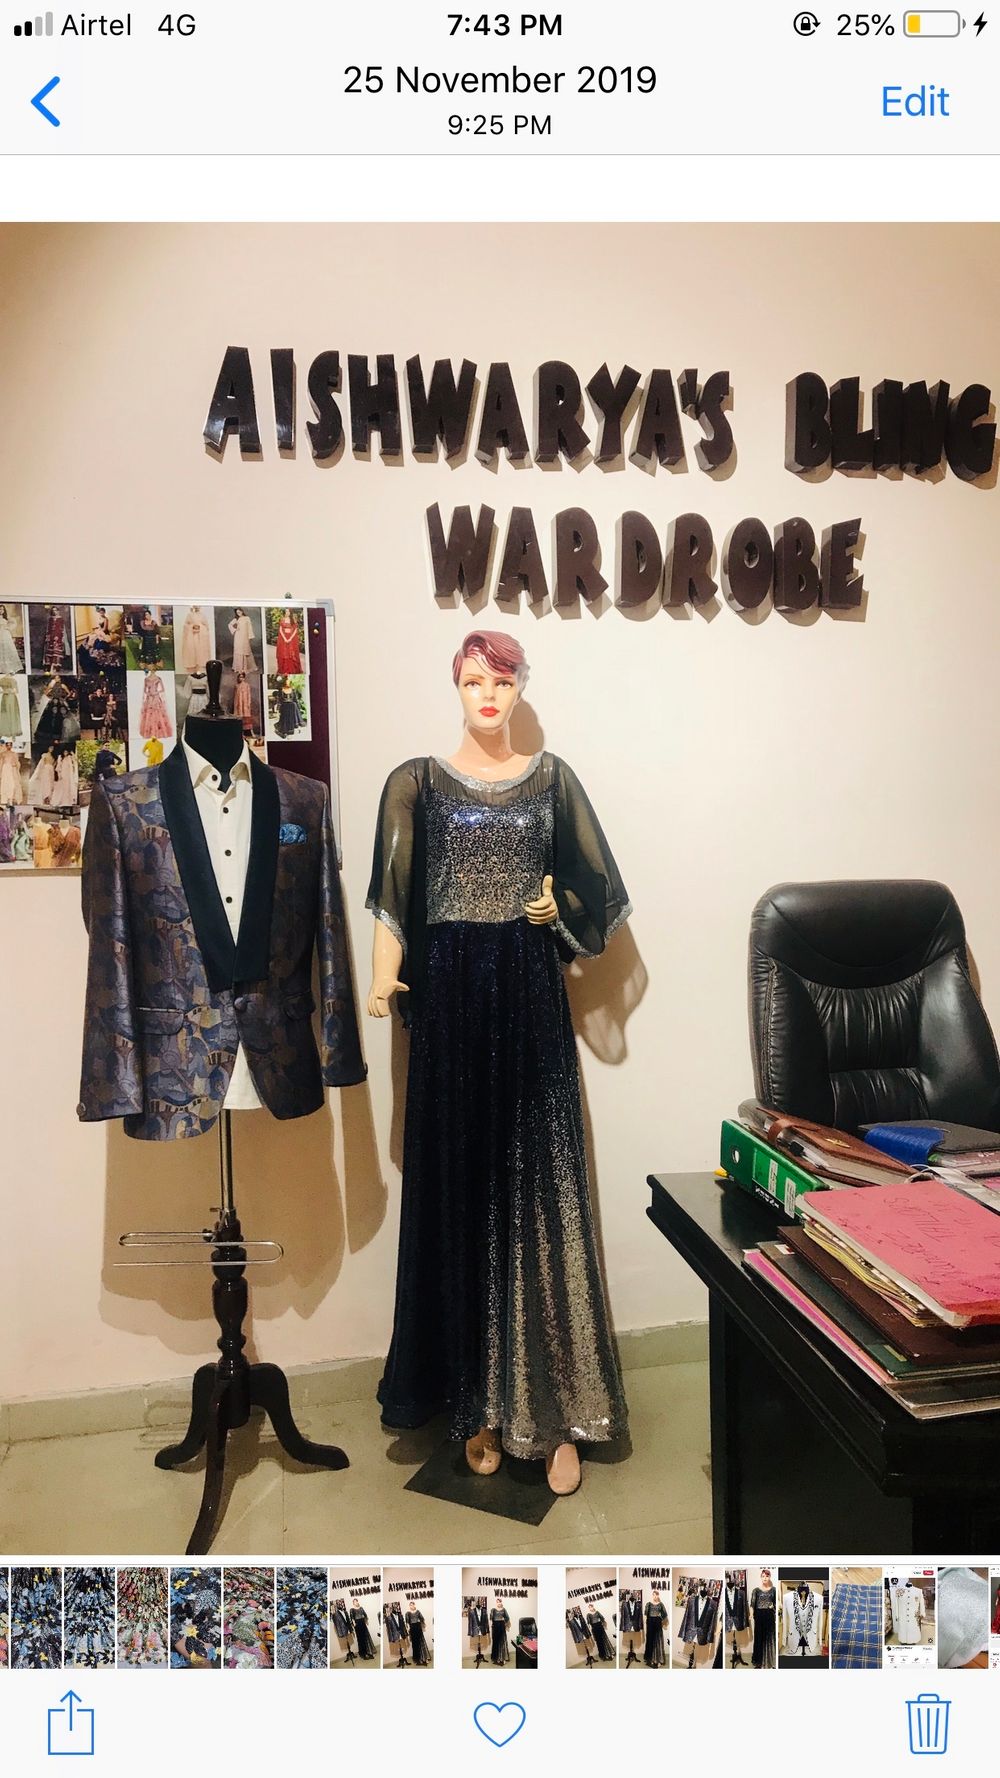 Photo From Aishwarya’s Bling Wardrobe  - By Aishwarya Bling Wardrobe